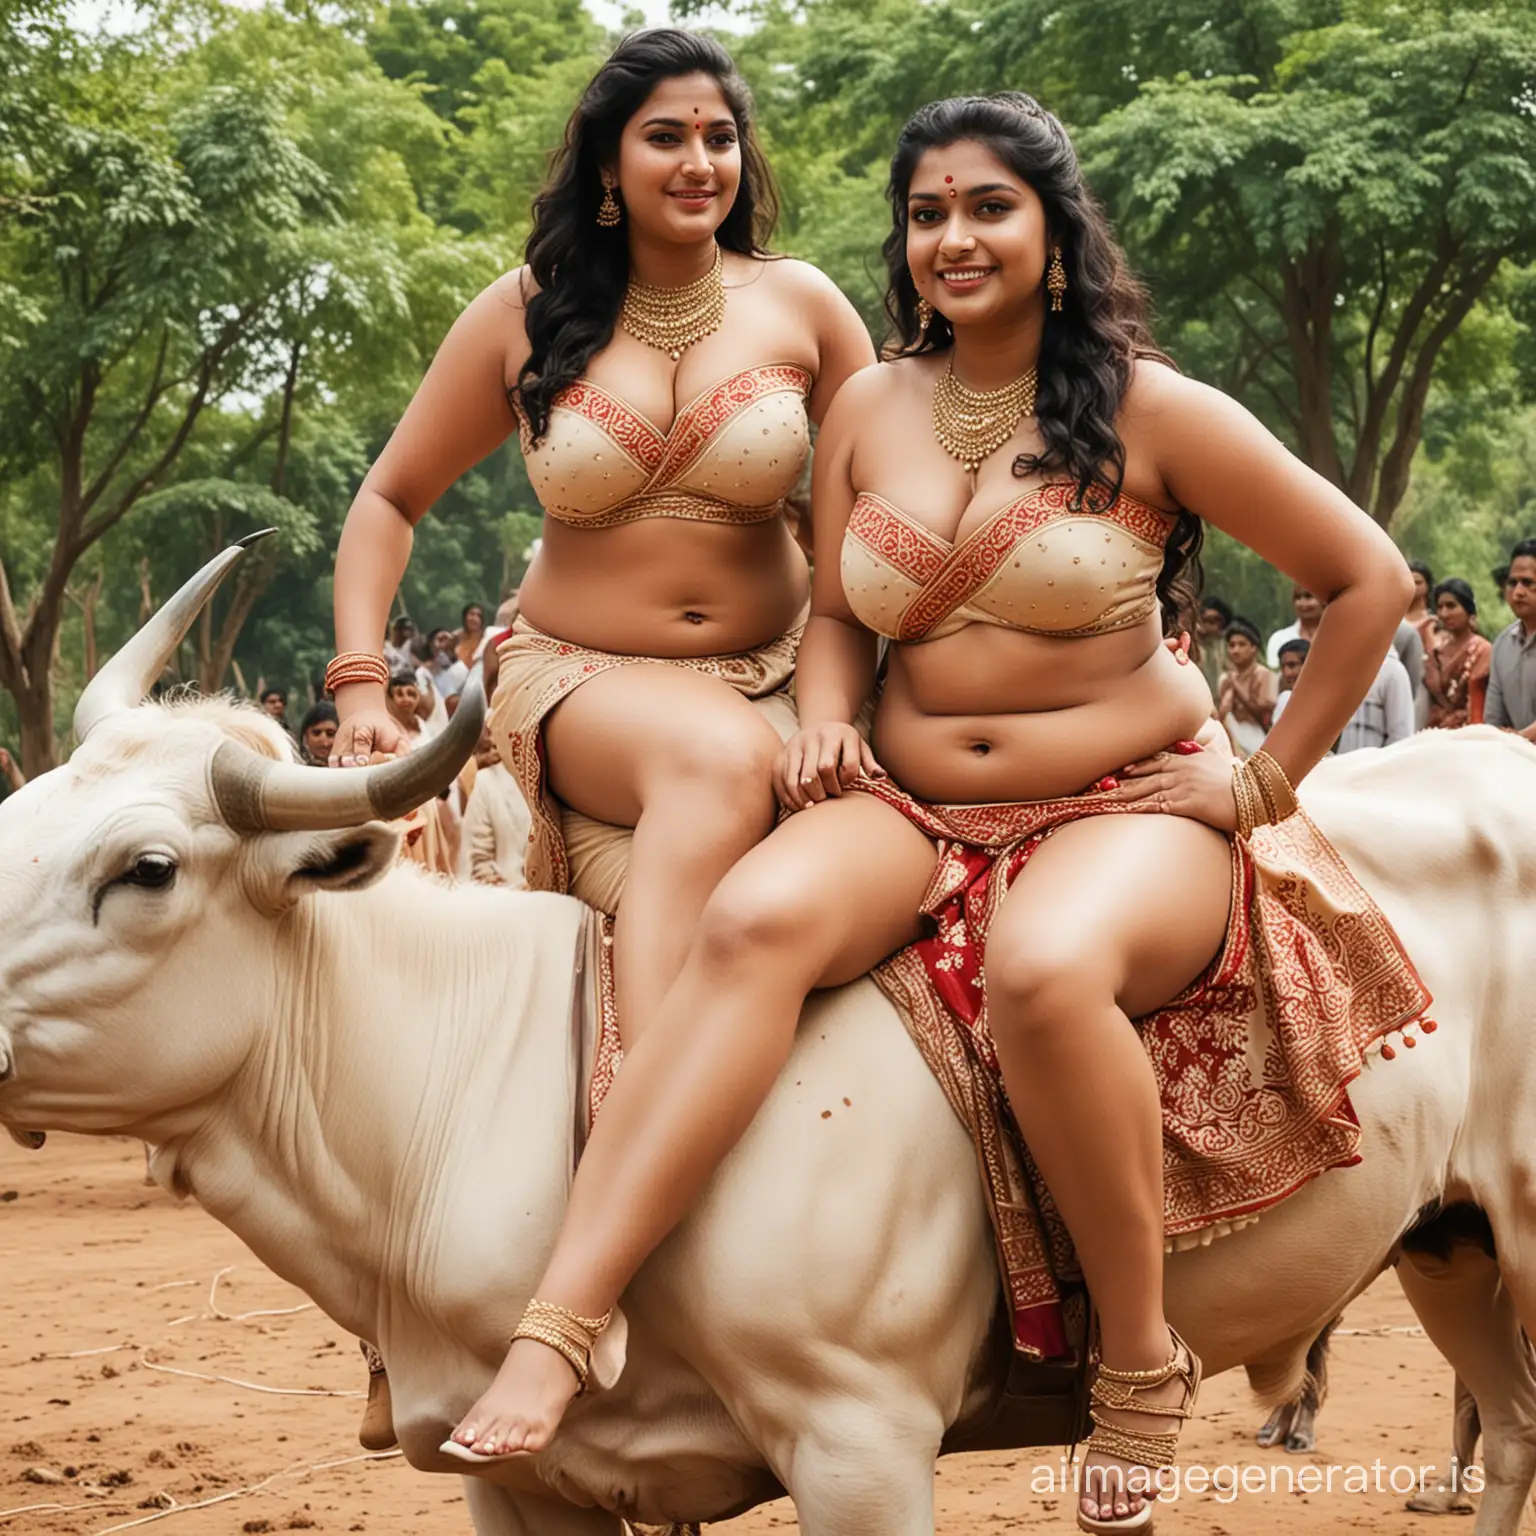 Beautiful-Plus-Size-Indian-Brides-Riding-Bulls